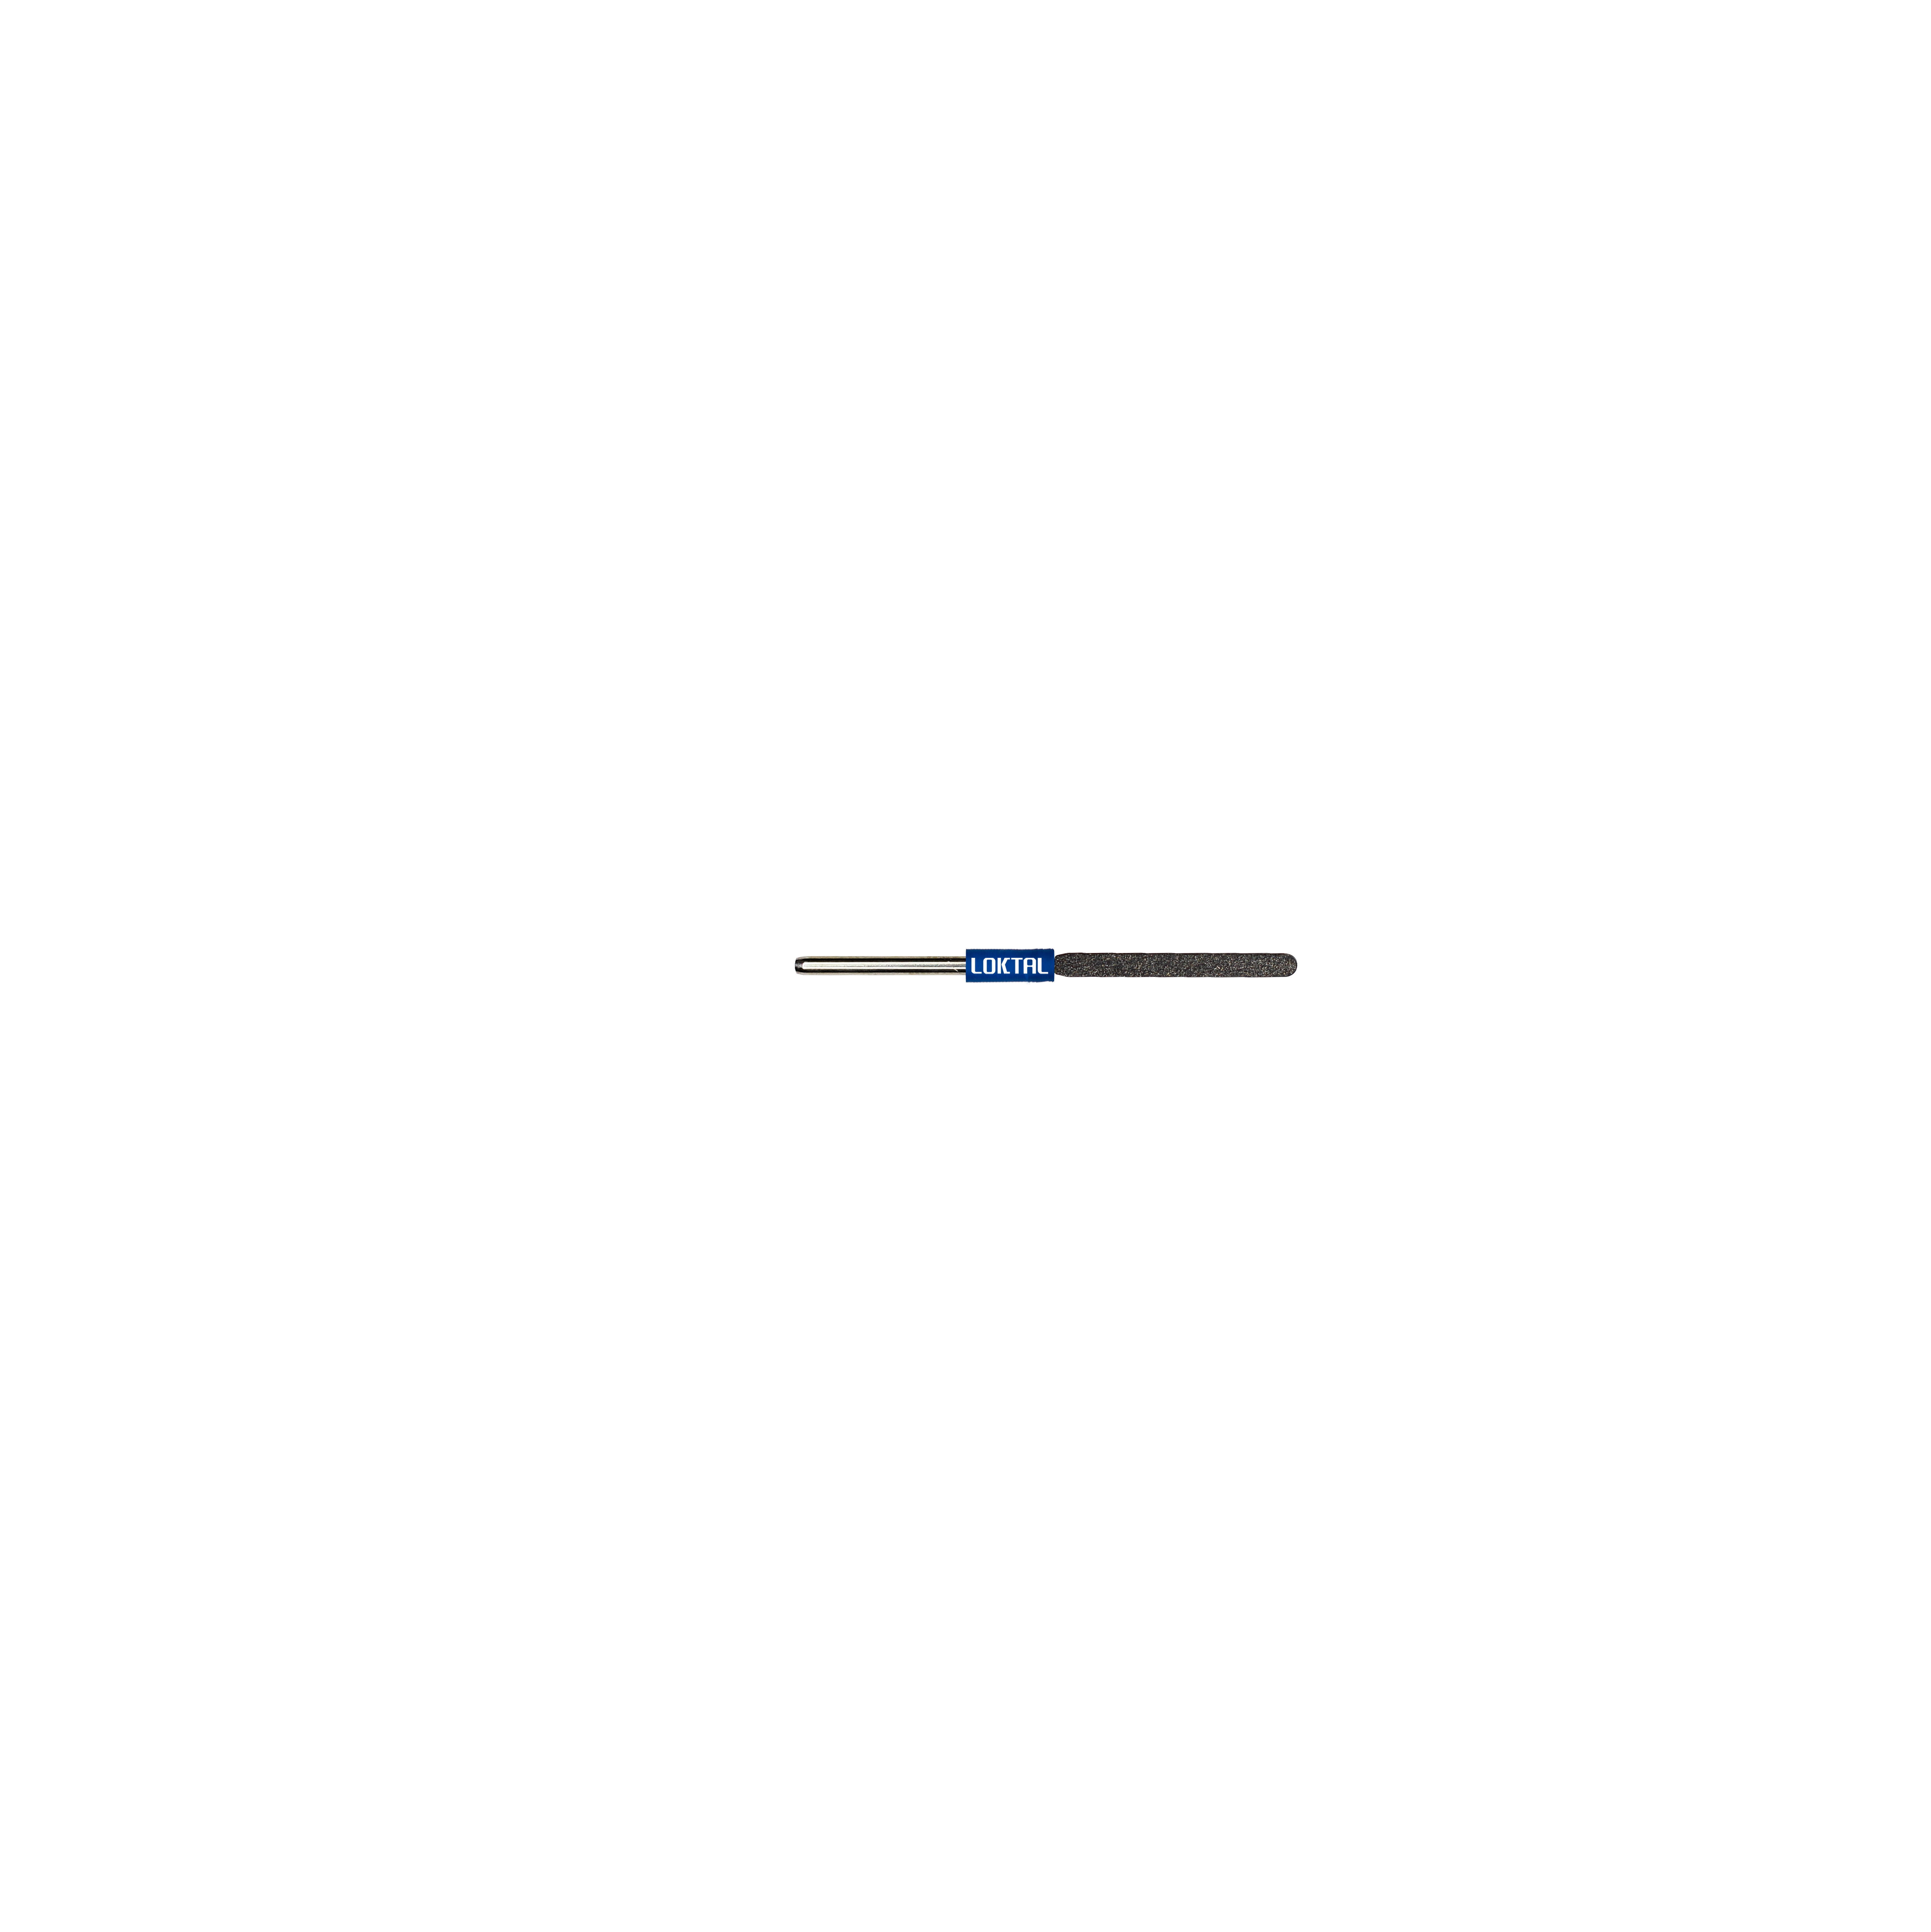 ACEL0137 - Eletrodo Eletrocirúrgico Faca, Reto